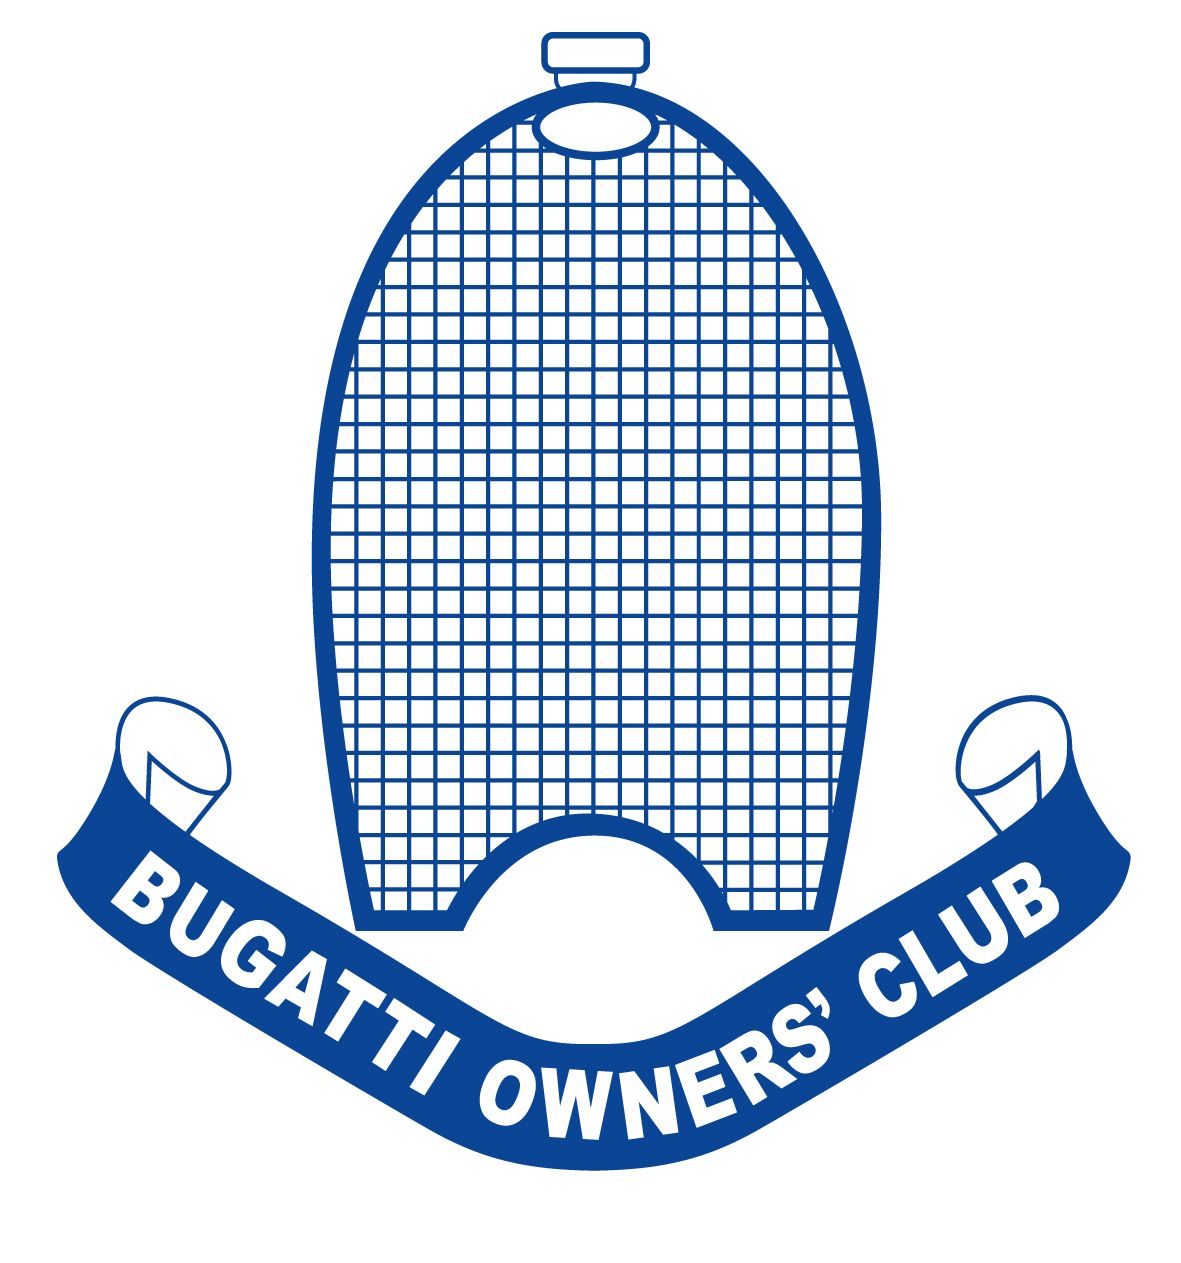 Bugatti Owners' Club